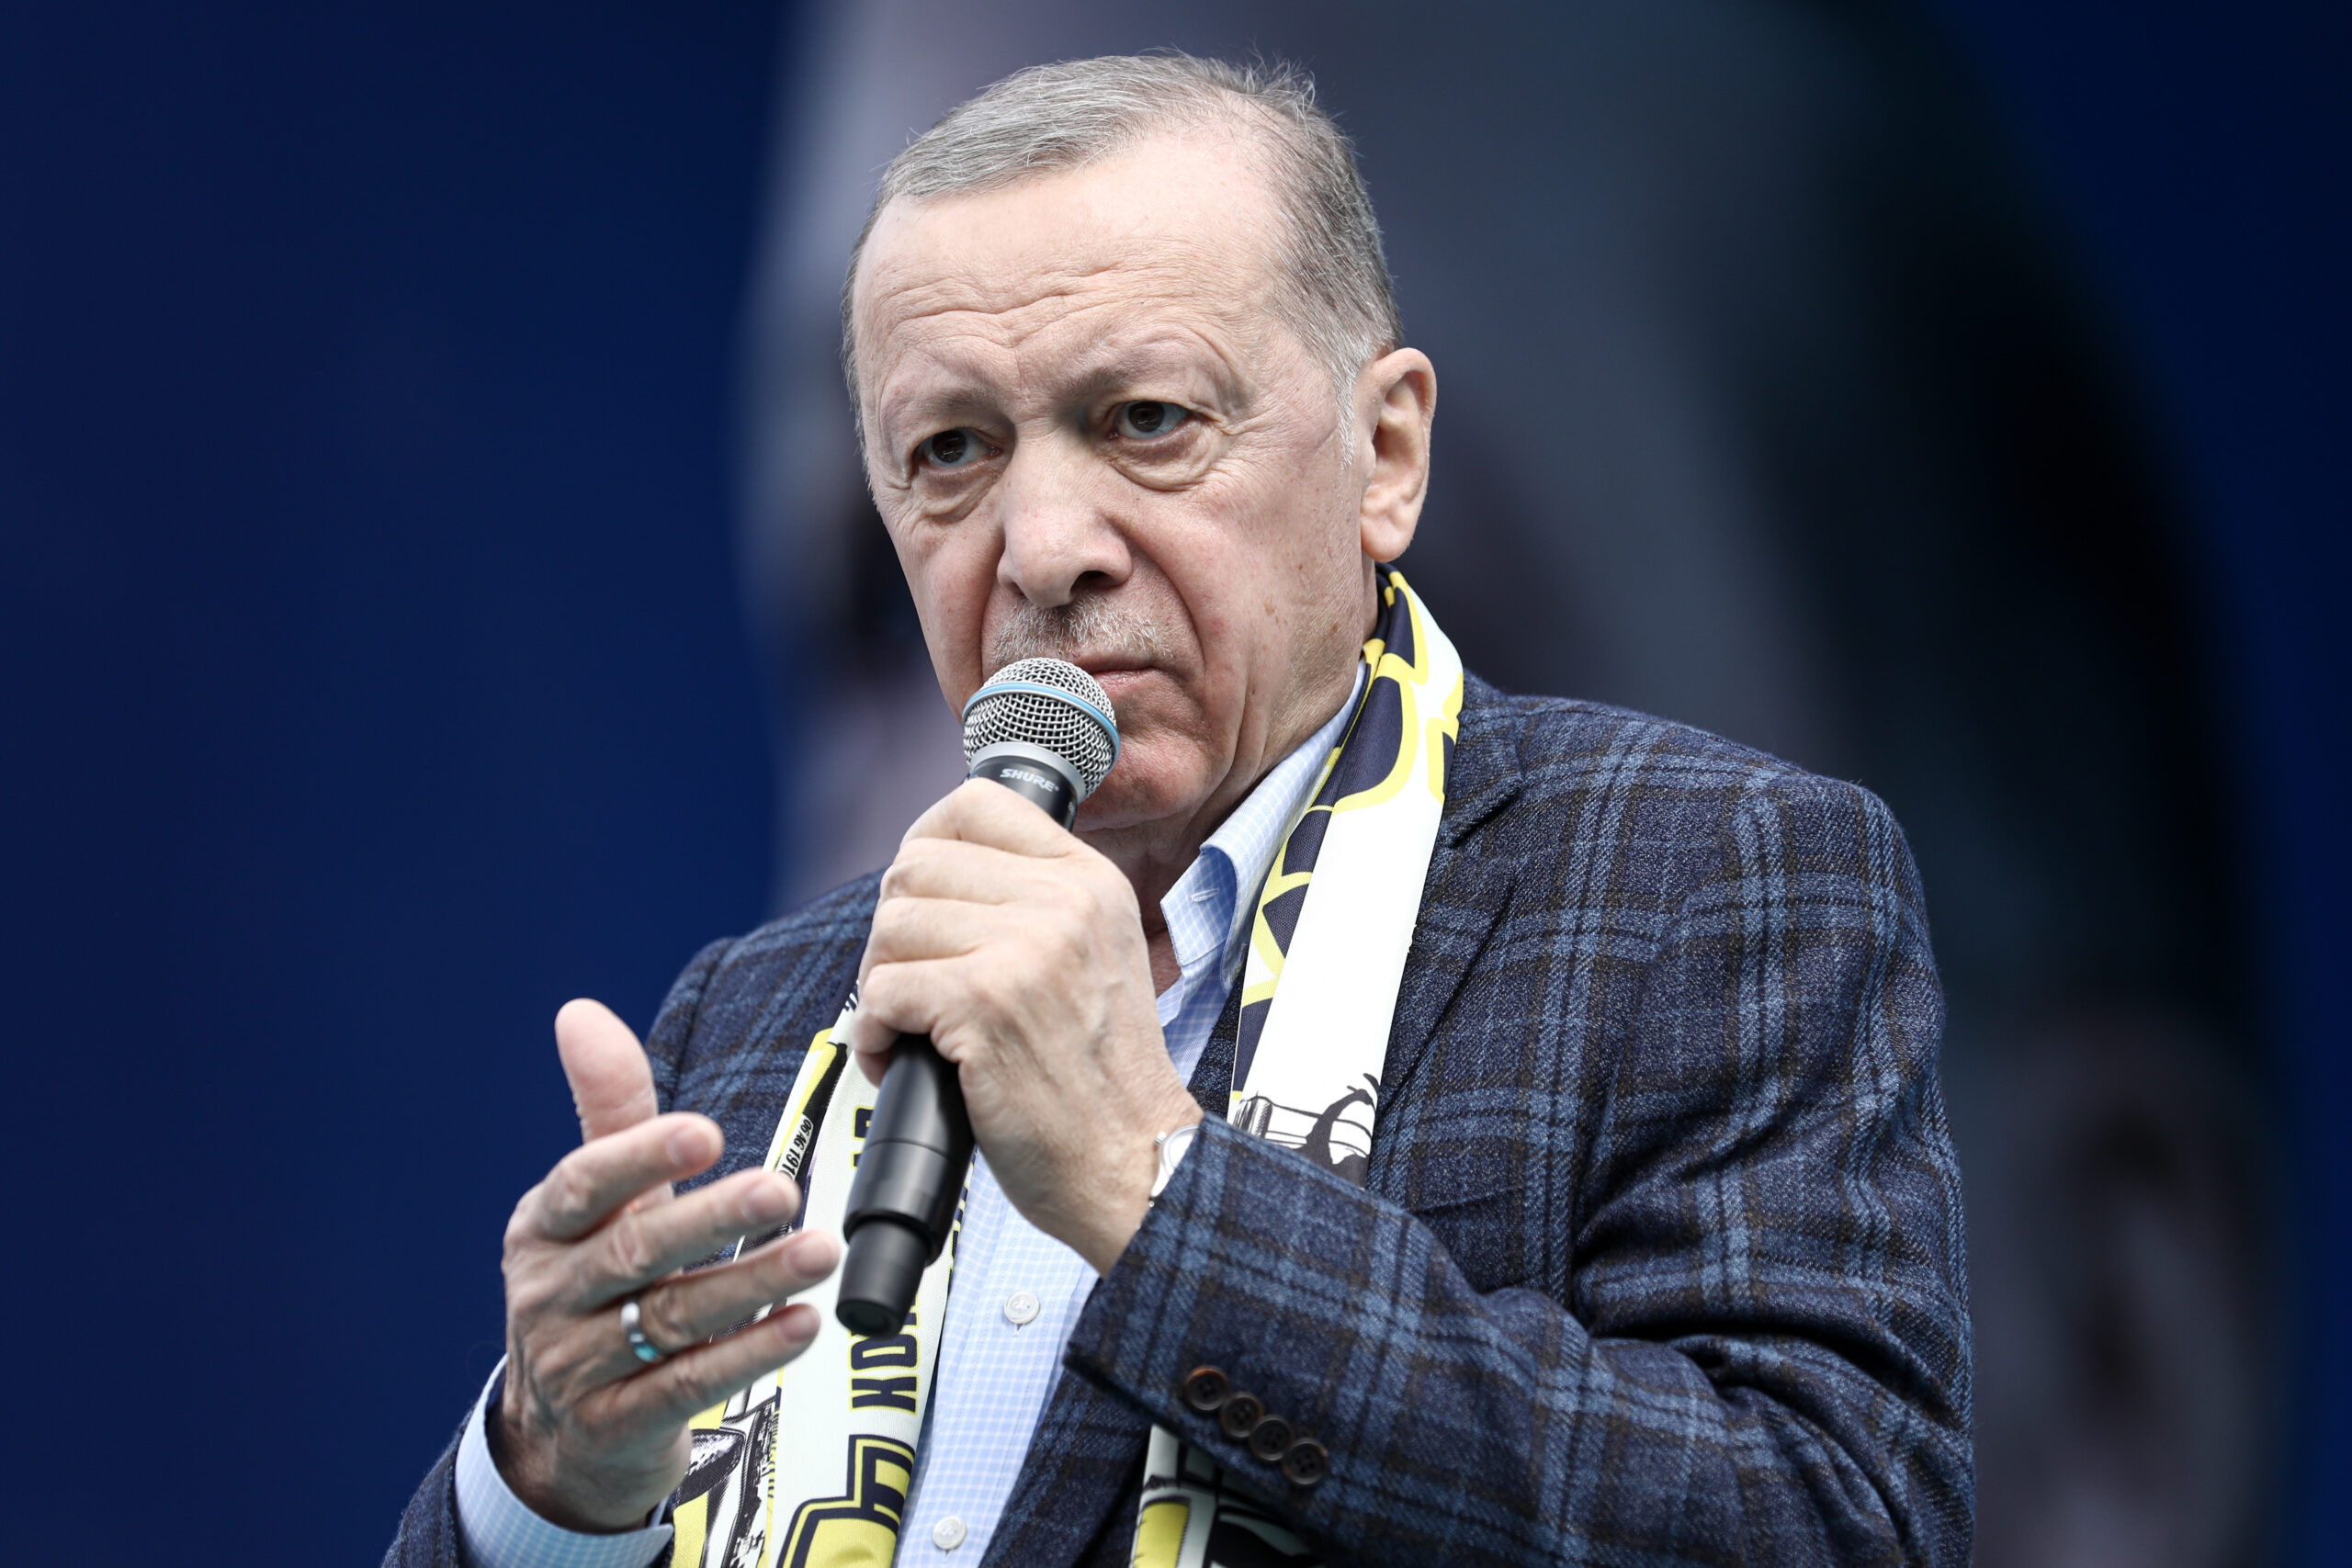 Recep Tayyip Erdogan am Mikrofon